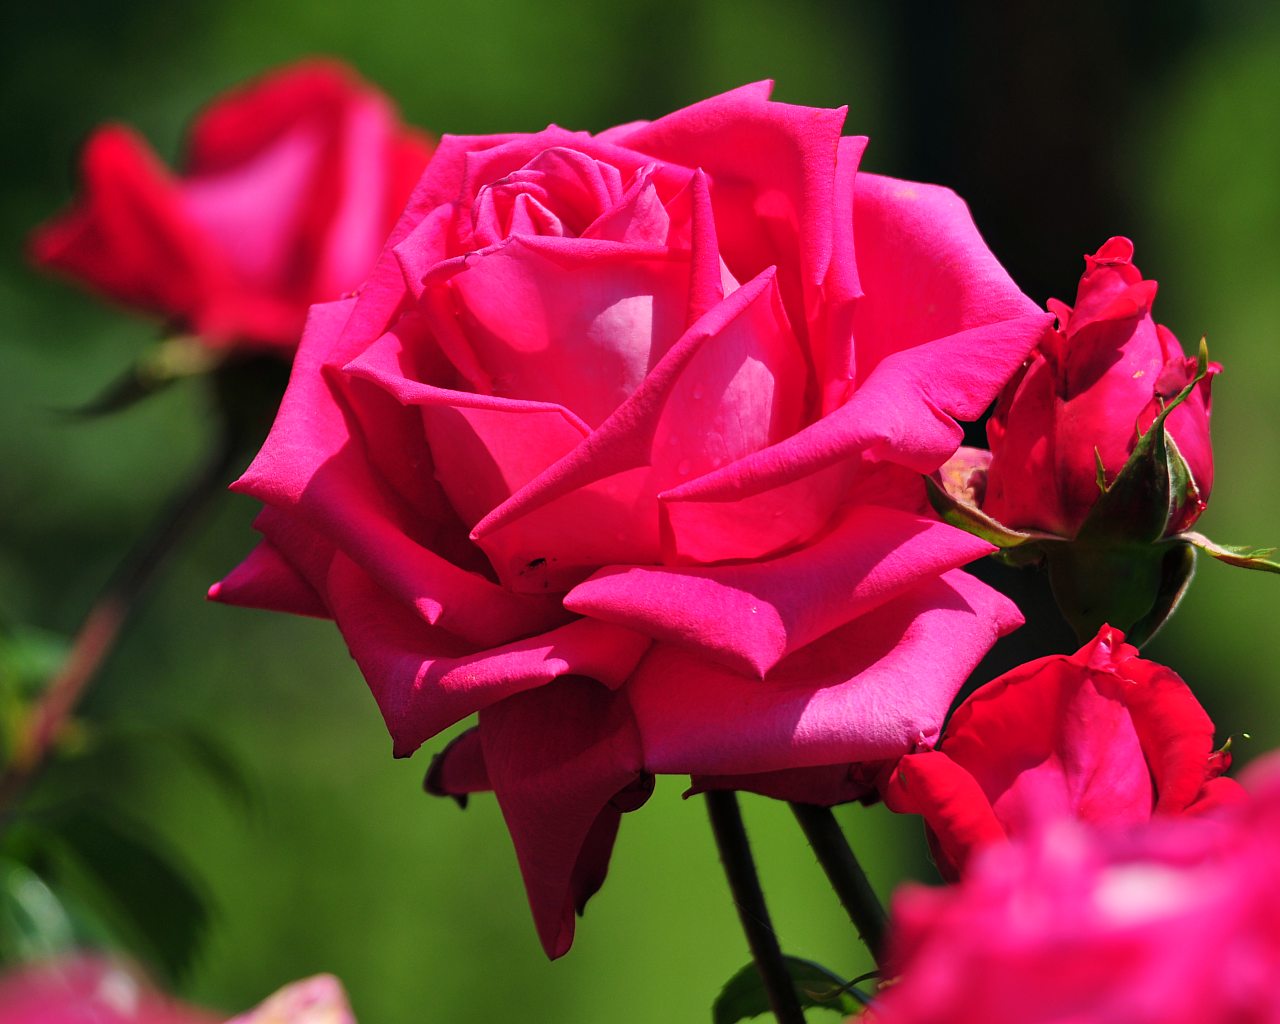 tapete mawar merah,blume,blütenblatt,gartenrosen,blühende pflanze,pflanze